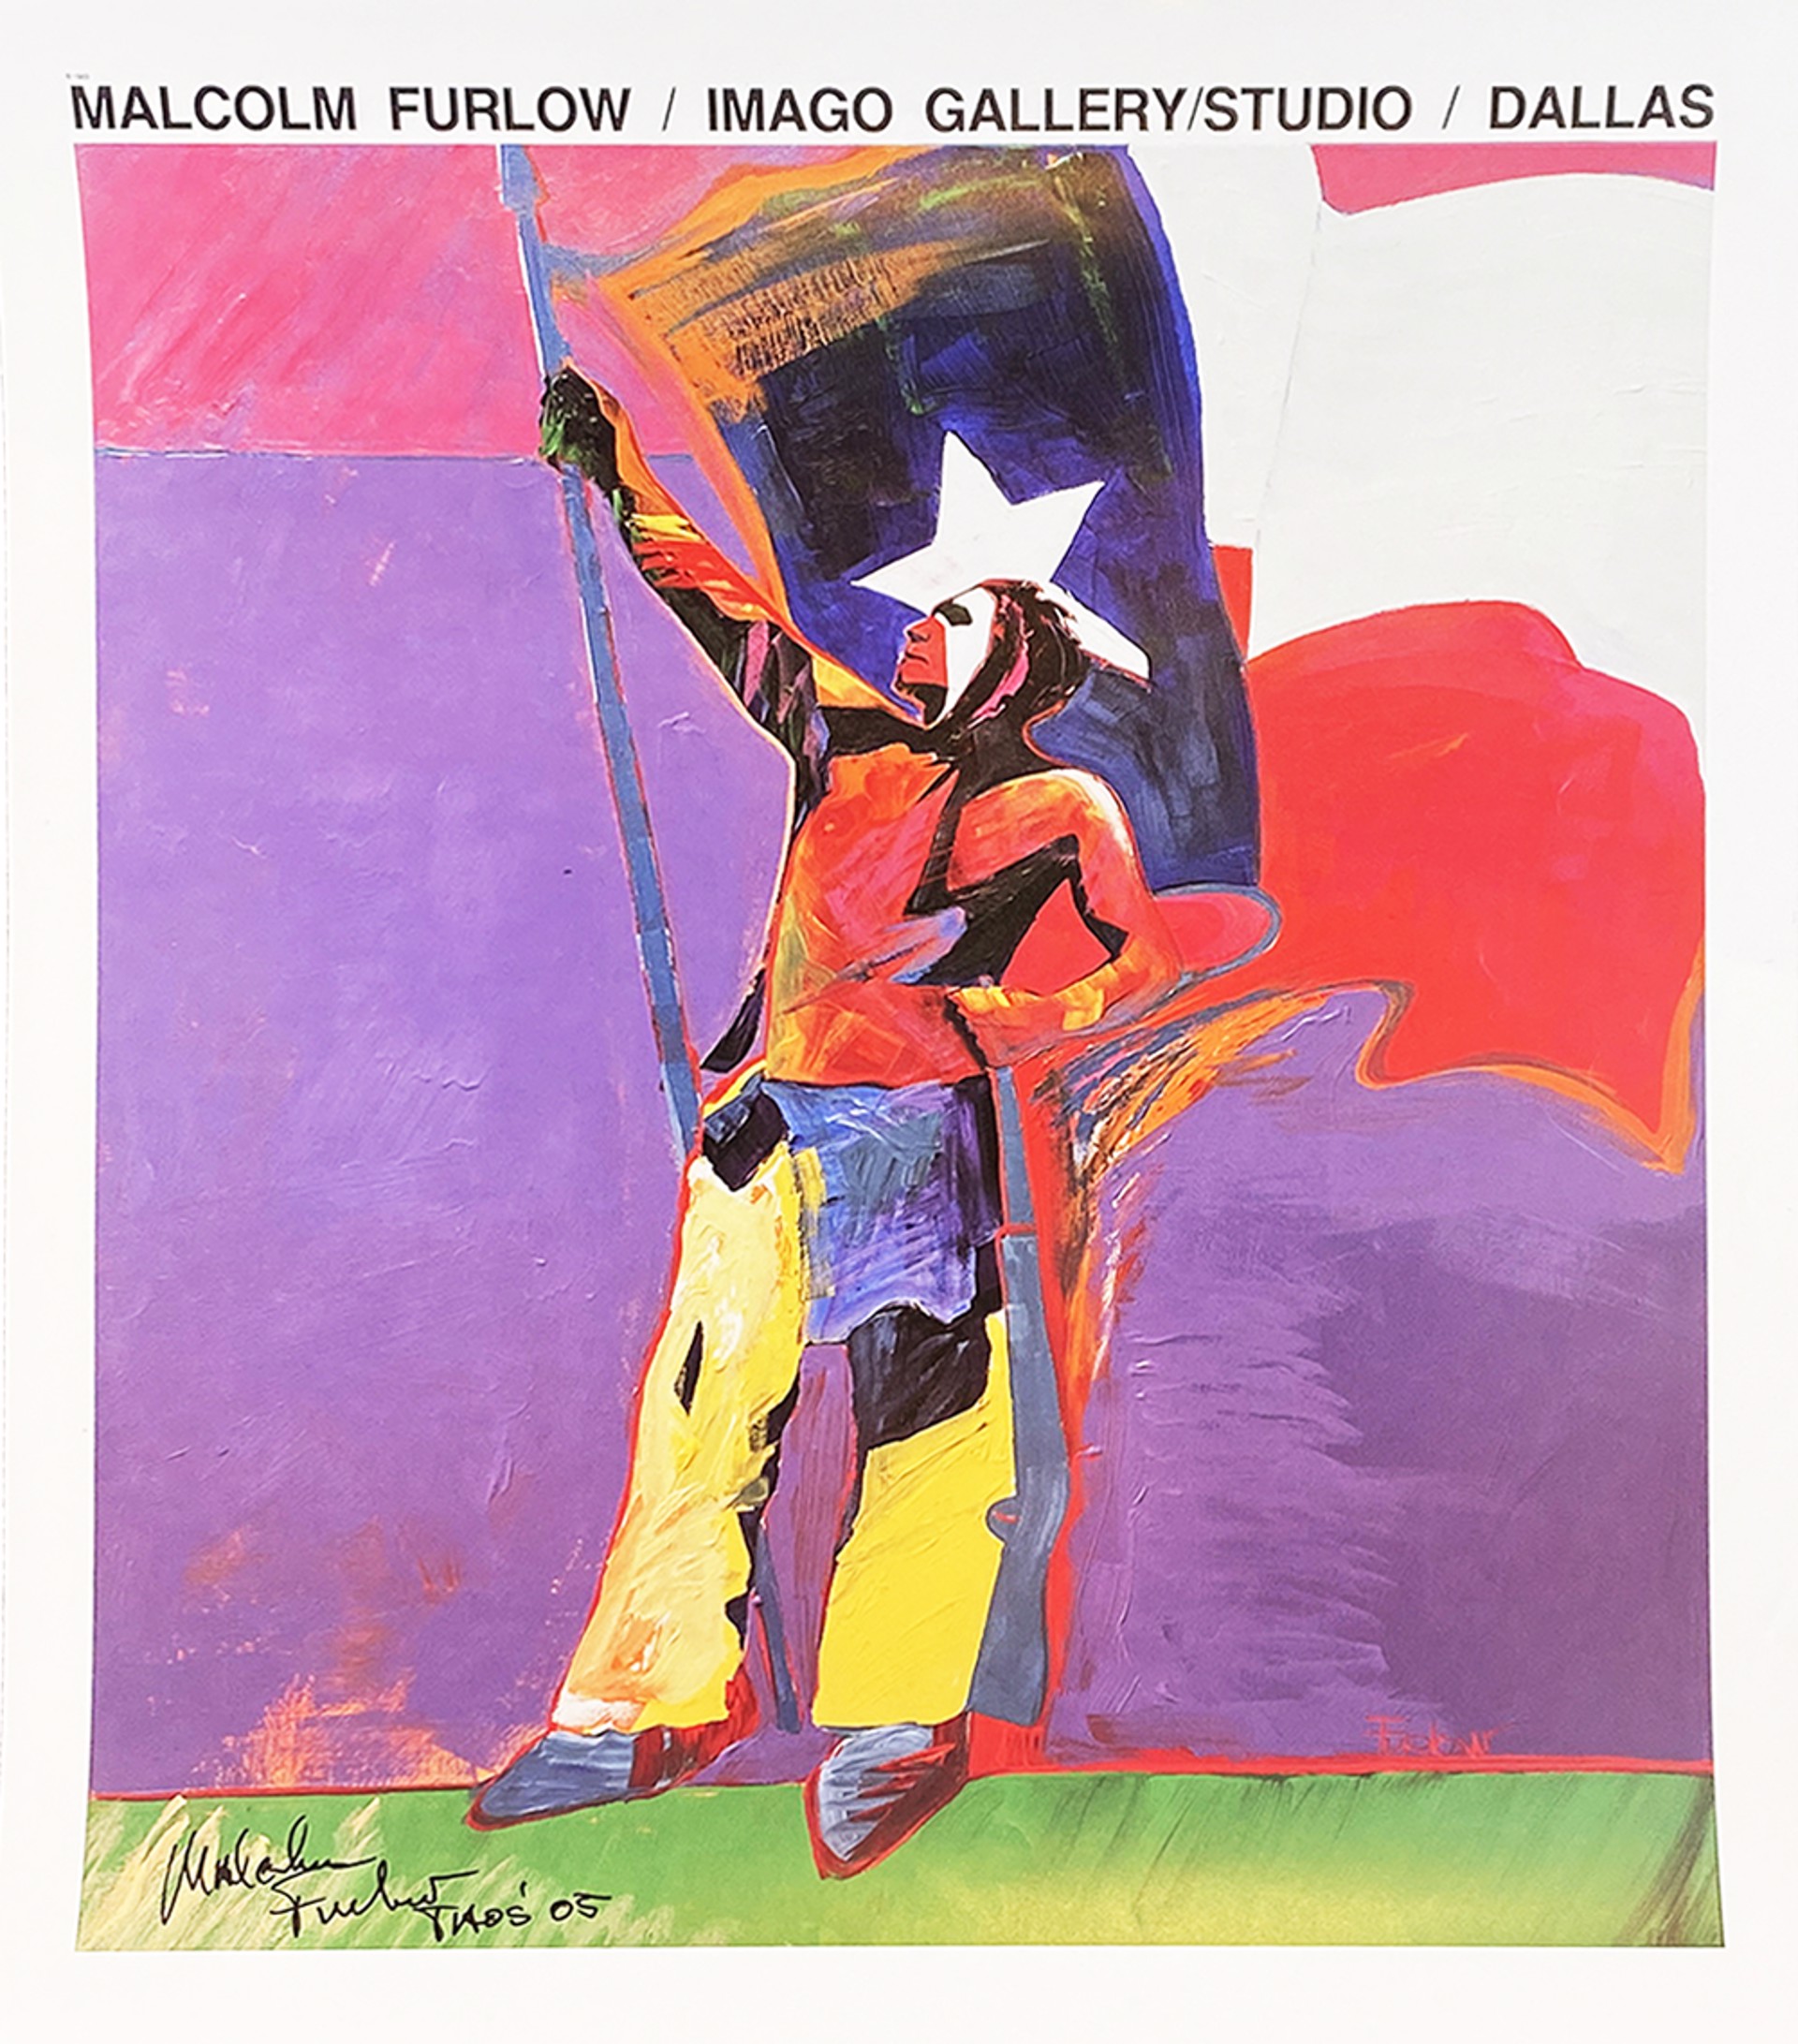 Imago Gallery Dallas Poster by Malcolm Furlow